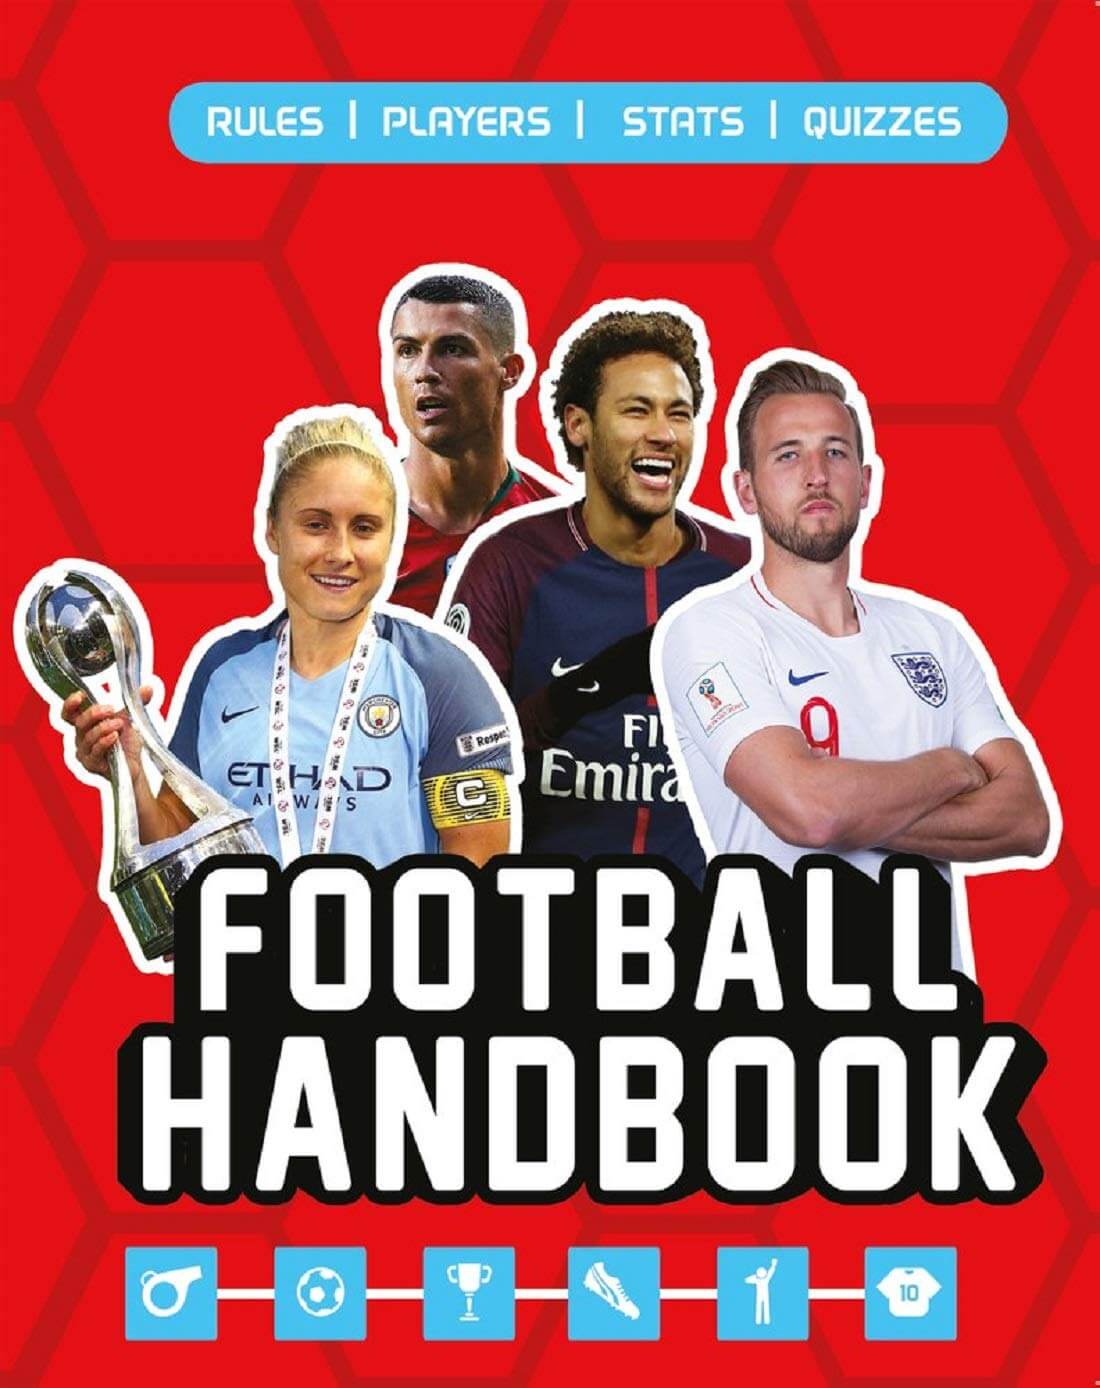 Football Handbook by Scholastic - best football books for teens